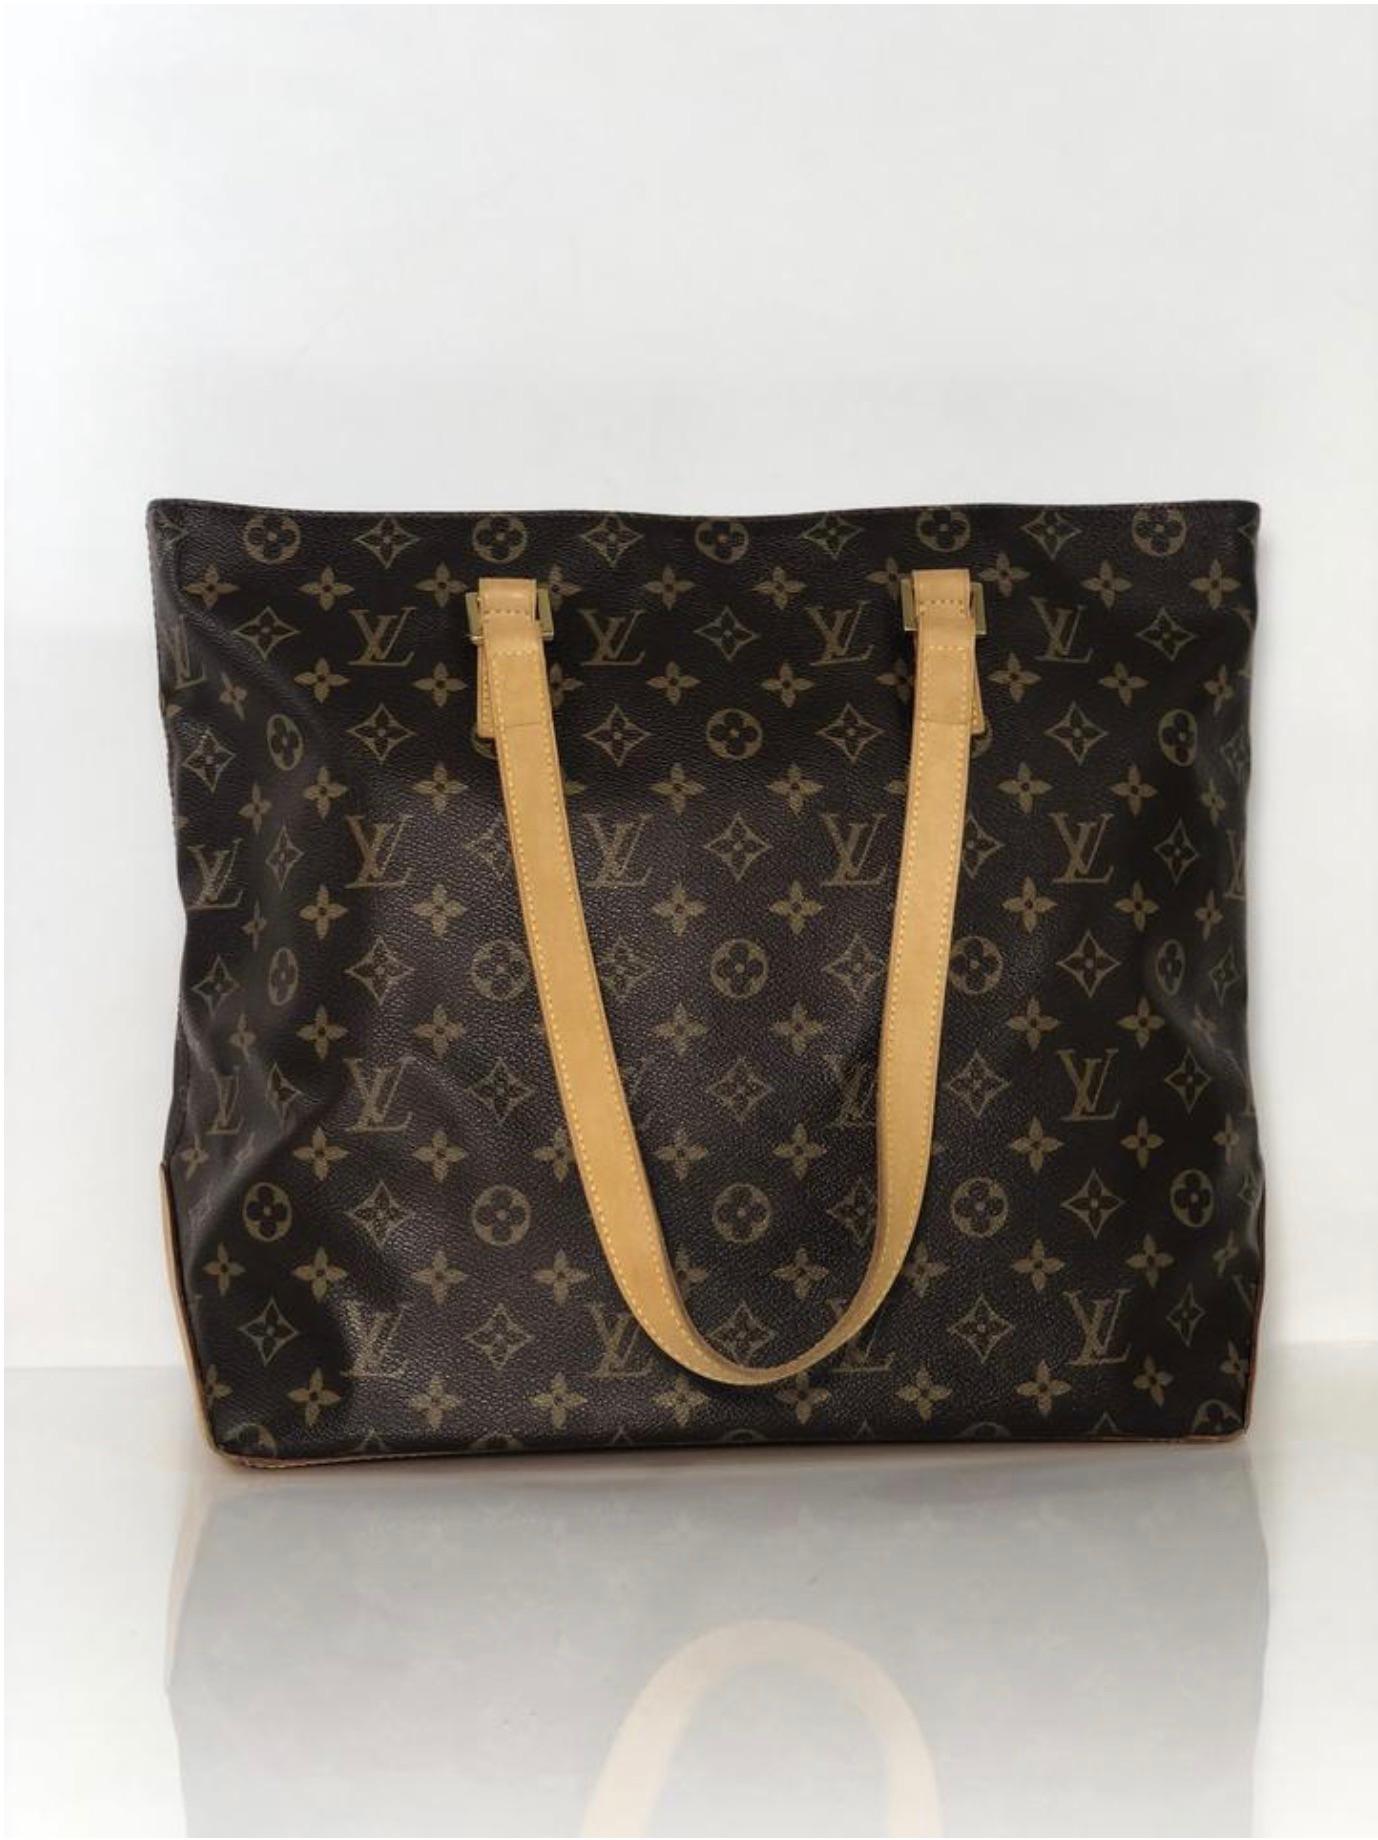 Women's or Men's Louis Vuitton Monogram Cabas Mezzo Tote Shoulder Handbag For Sale